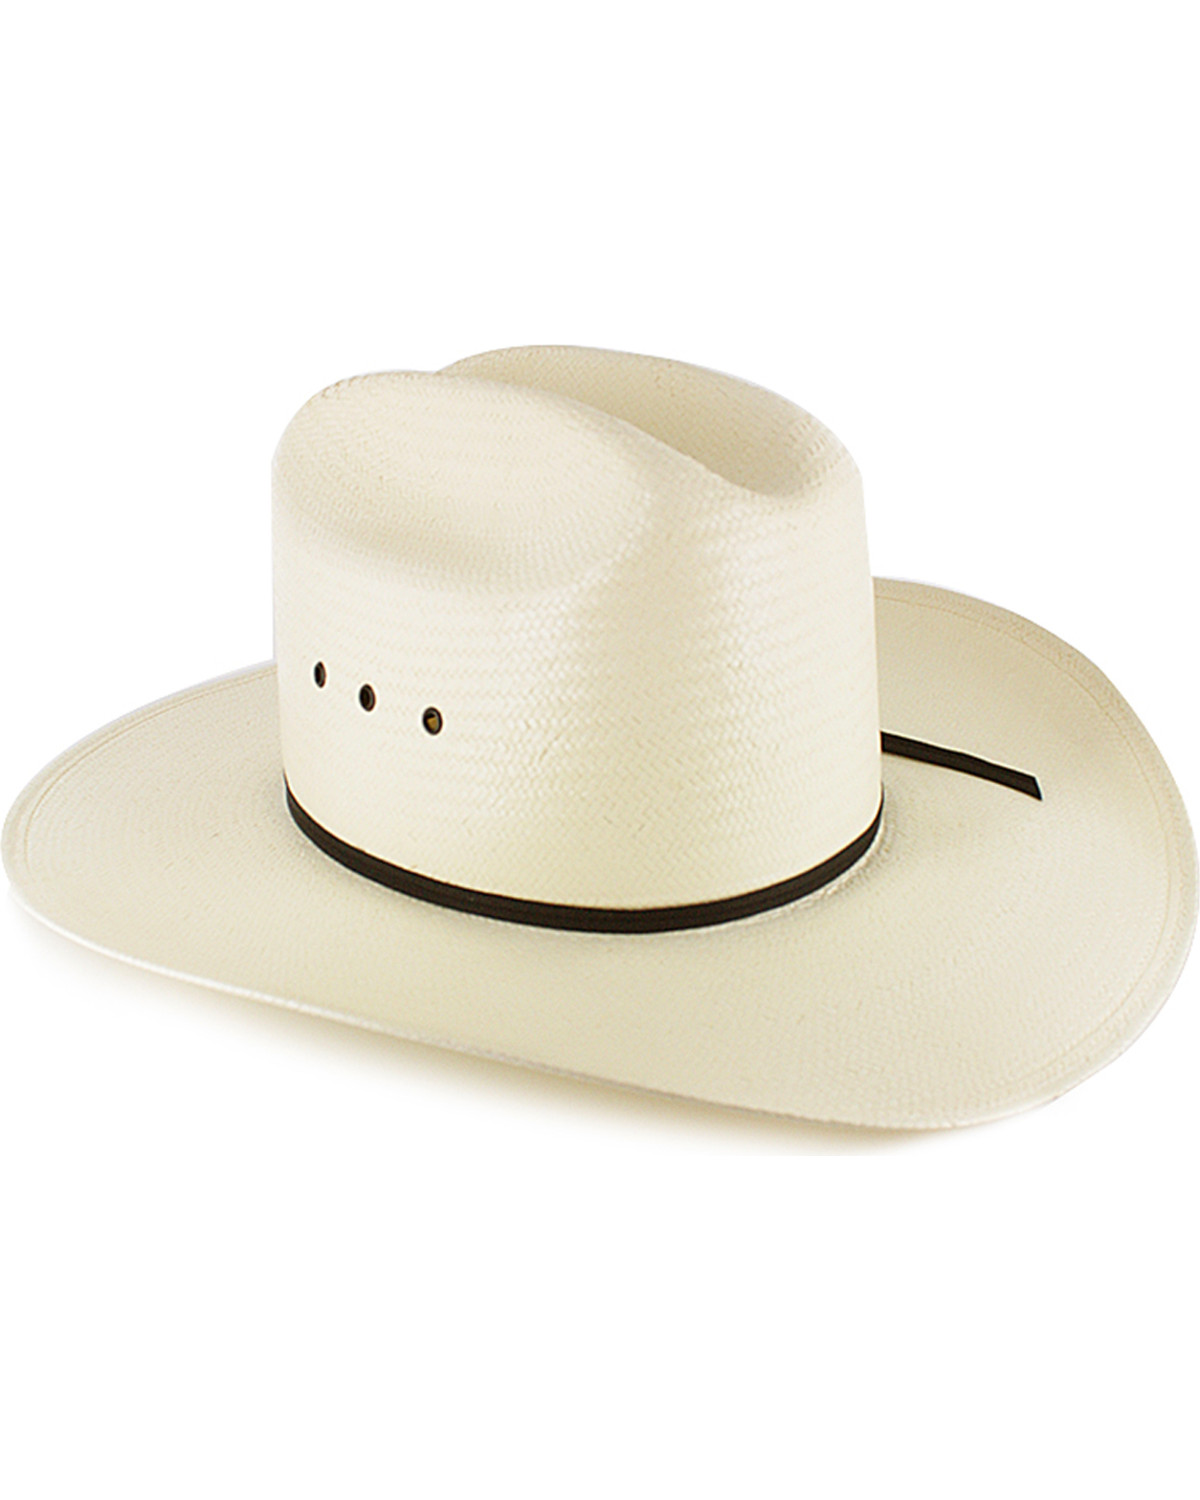 Resistol Kids' Straw Cowboy Hat